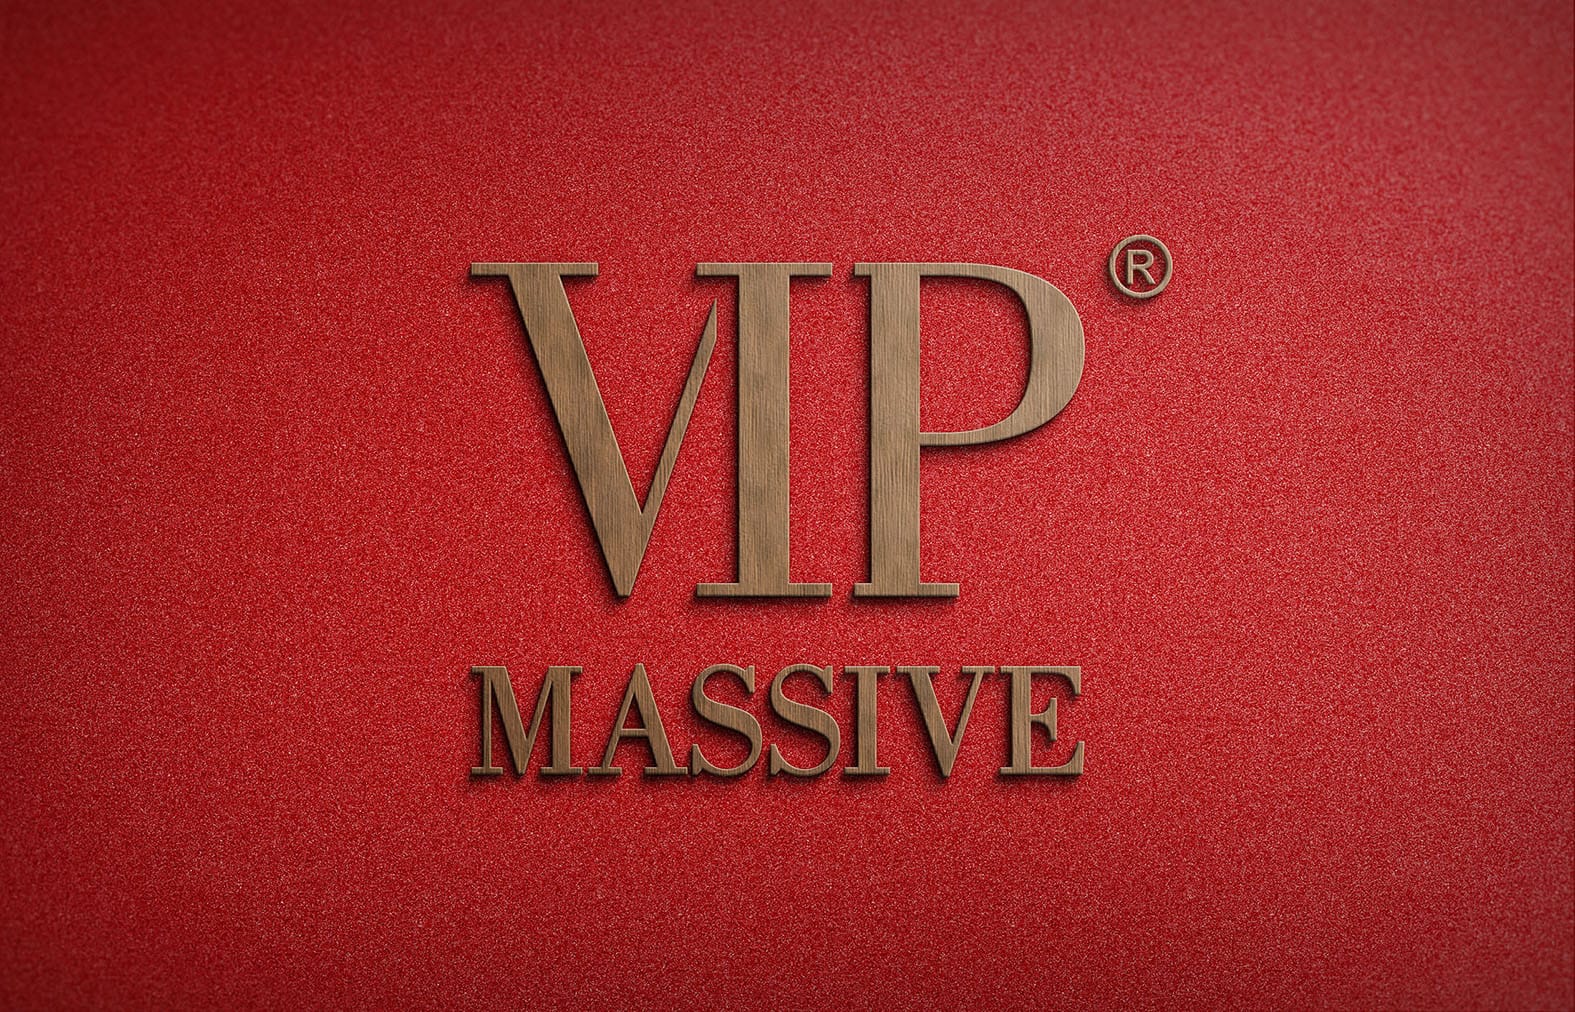 Брендинг торгового знака 2017 - VIP Massive